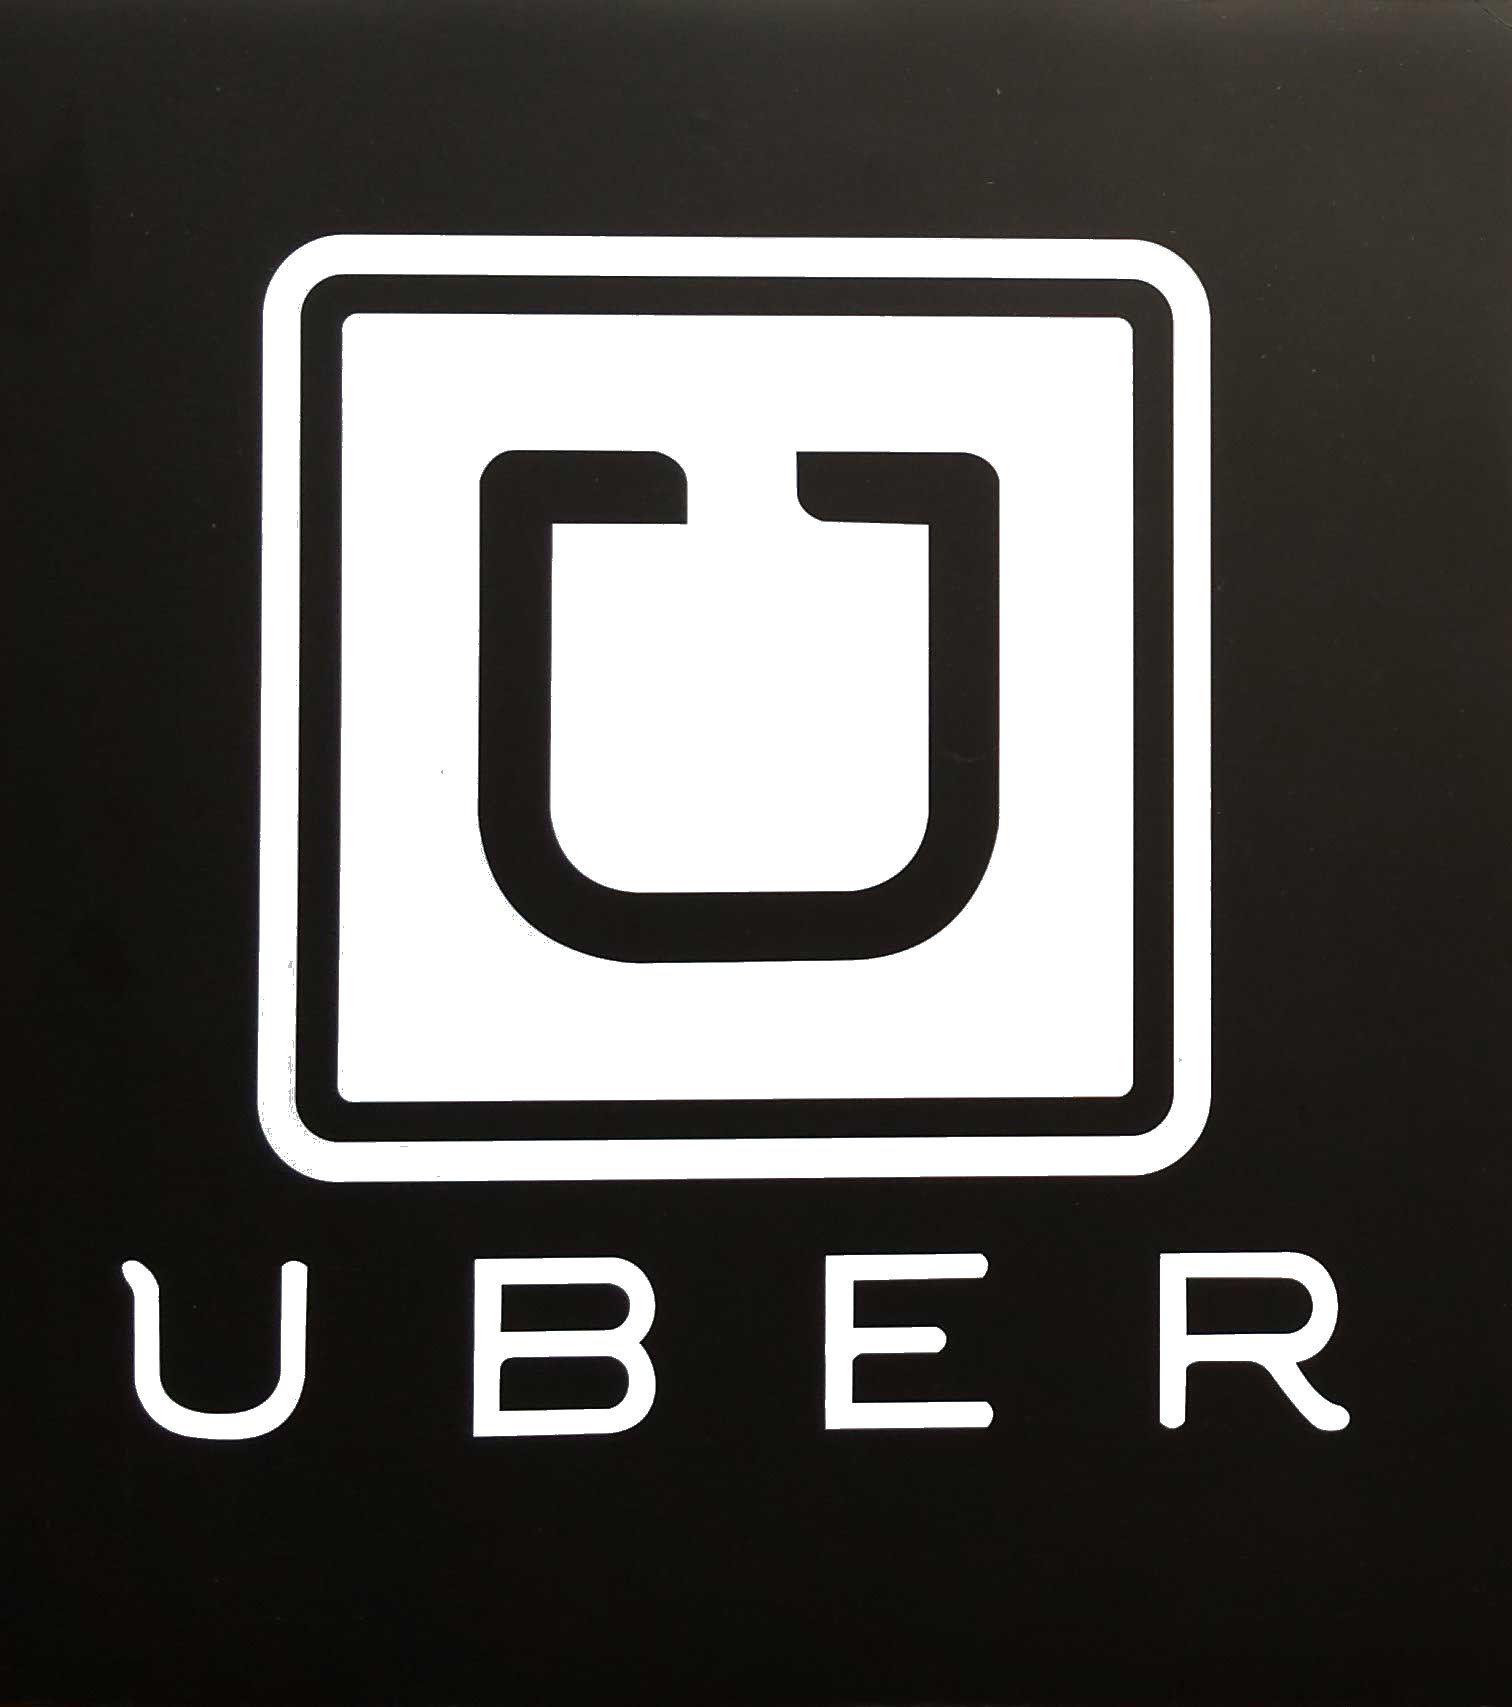 Uber Car Logo - Magnetic Car Sign 5 X 5.5 White on Black - Bling for your Uber Chariot